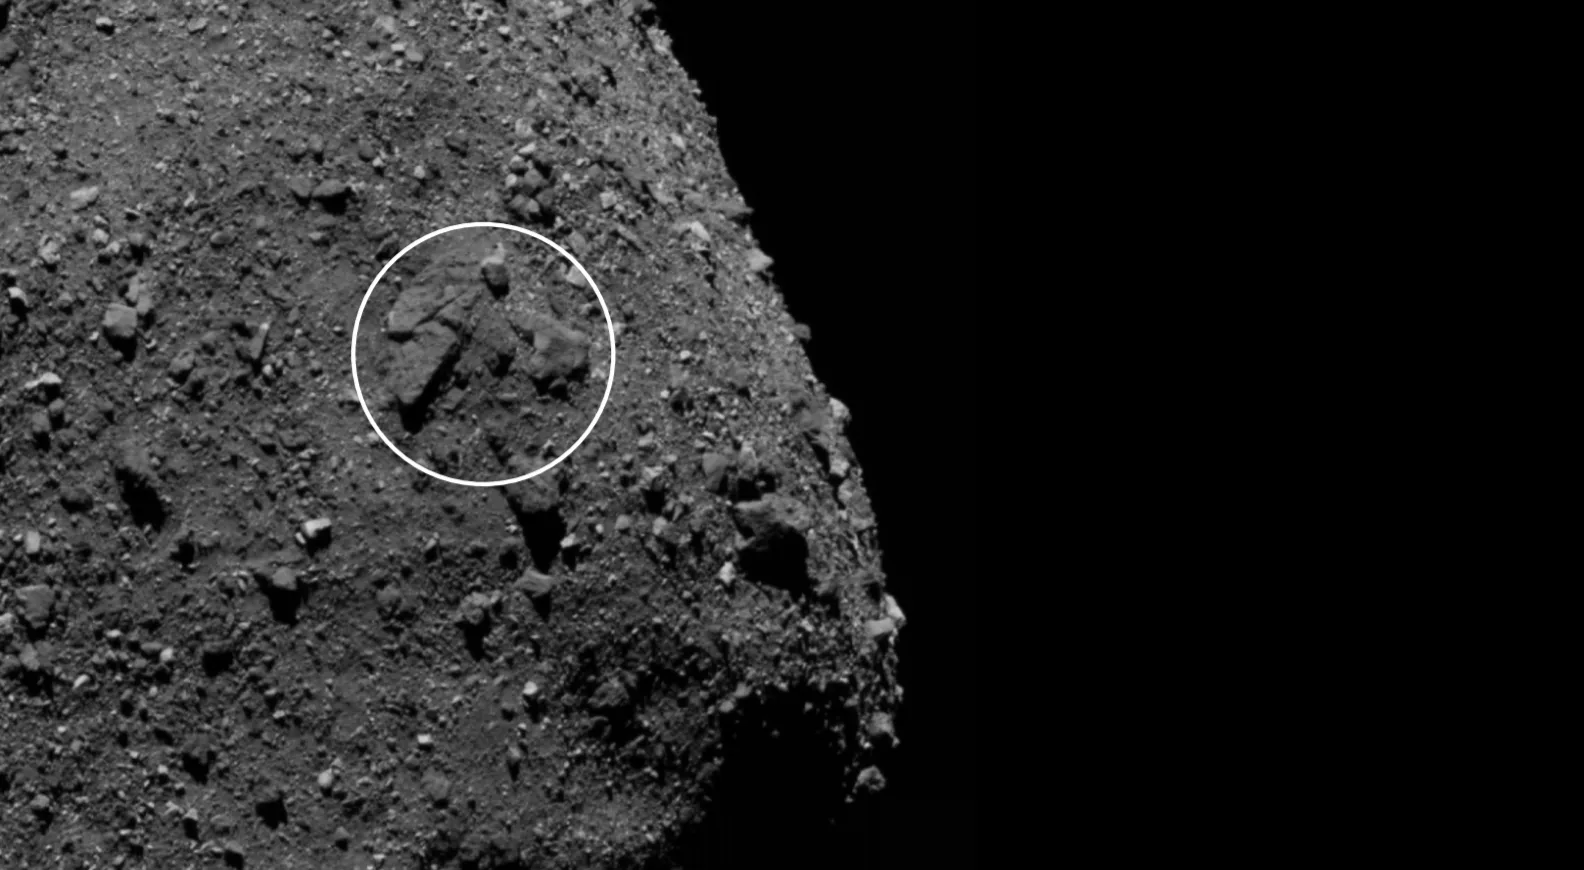 Група скель на поверхні астероїда Бенну